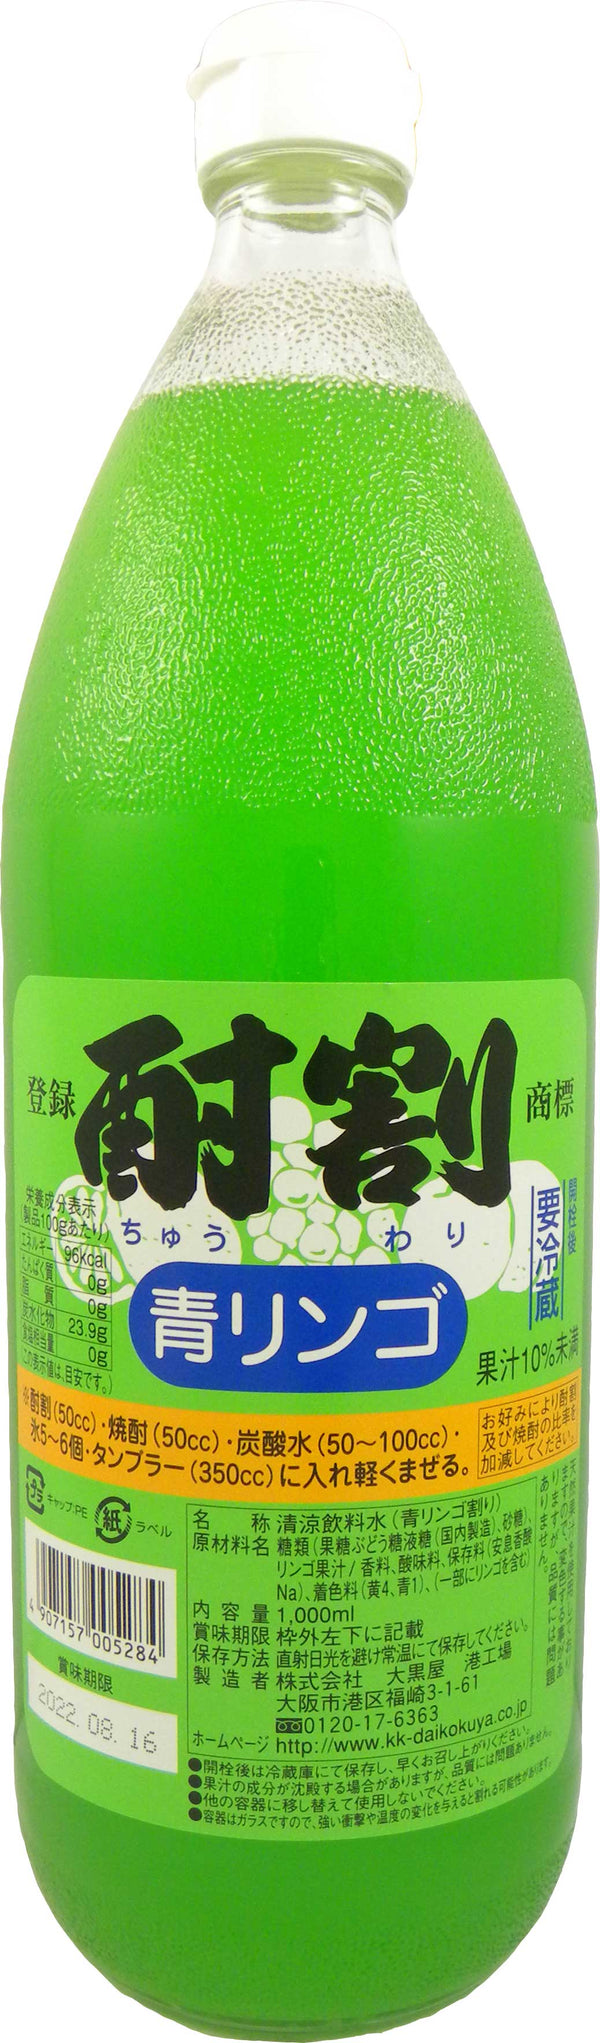 Daikokuya Chuwari Green Apple 1L Bottle Syrup Commercial Use